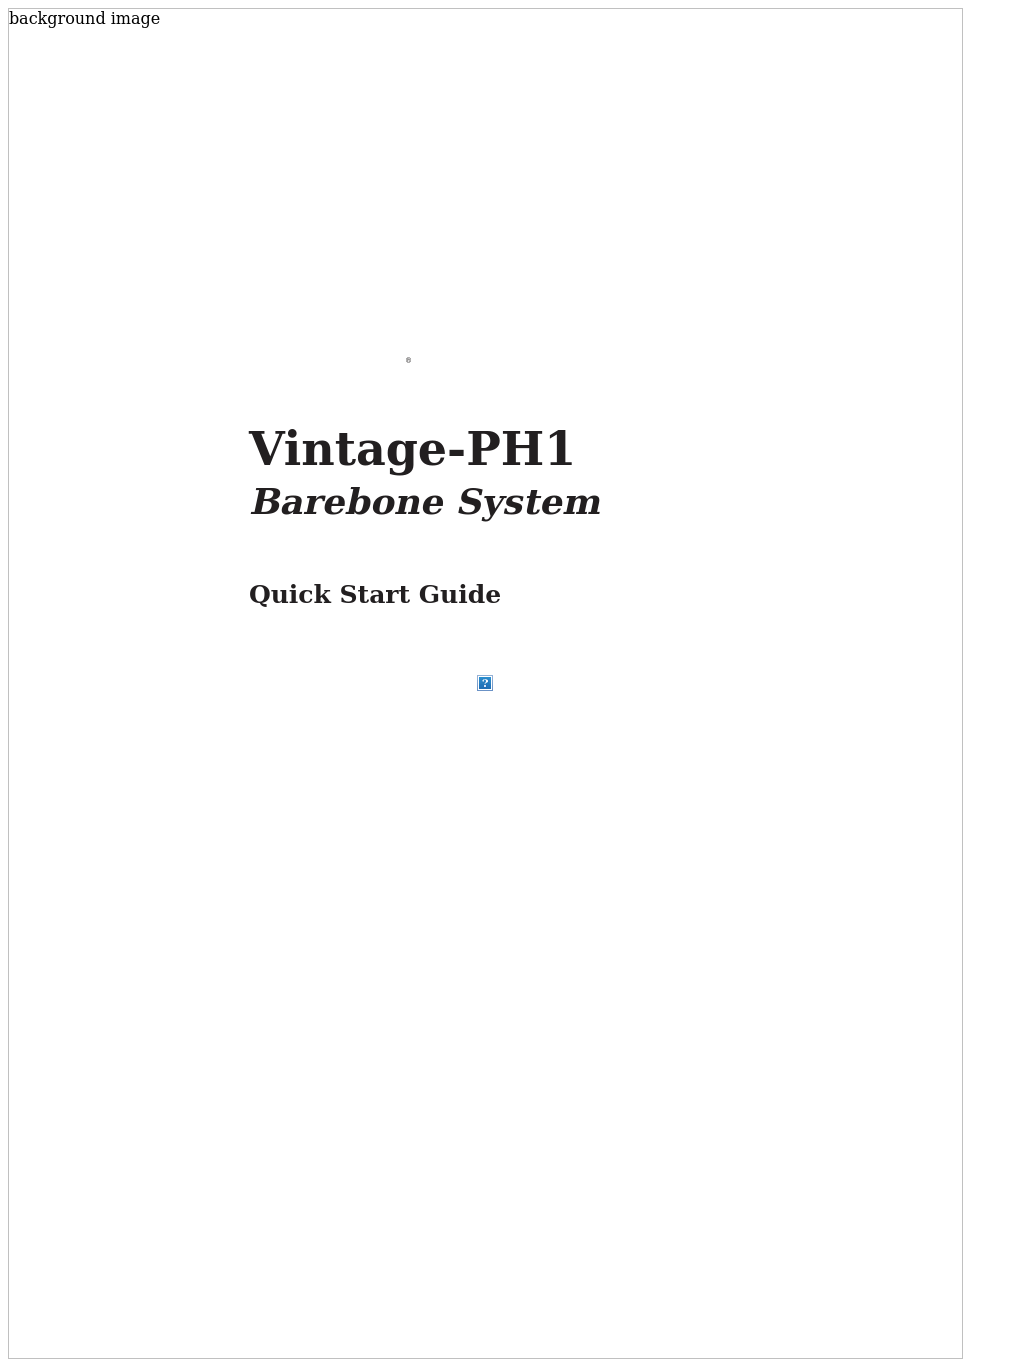 Barebone Vintage-PH1